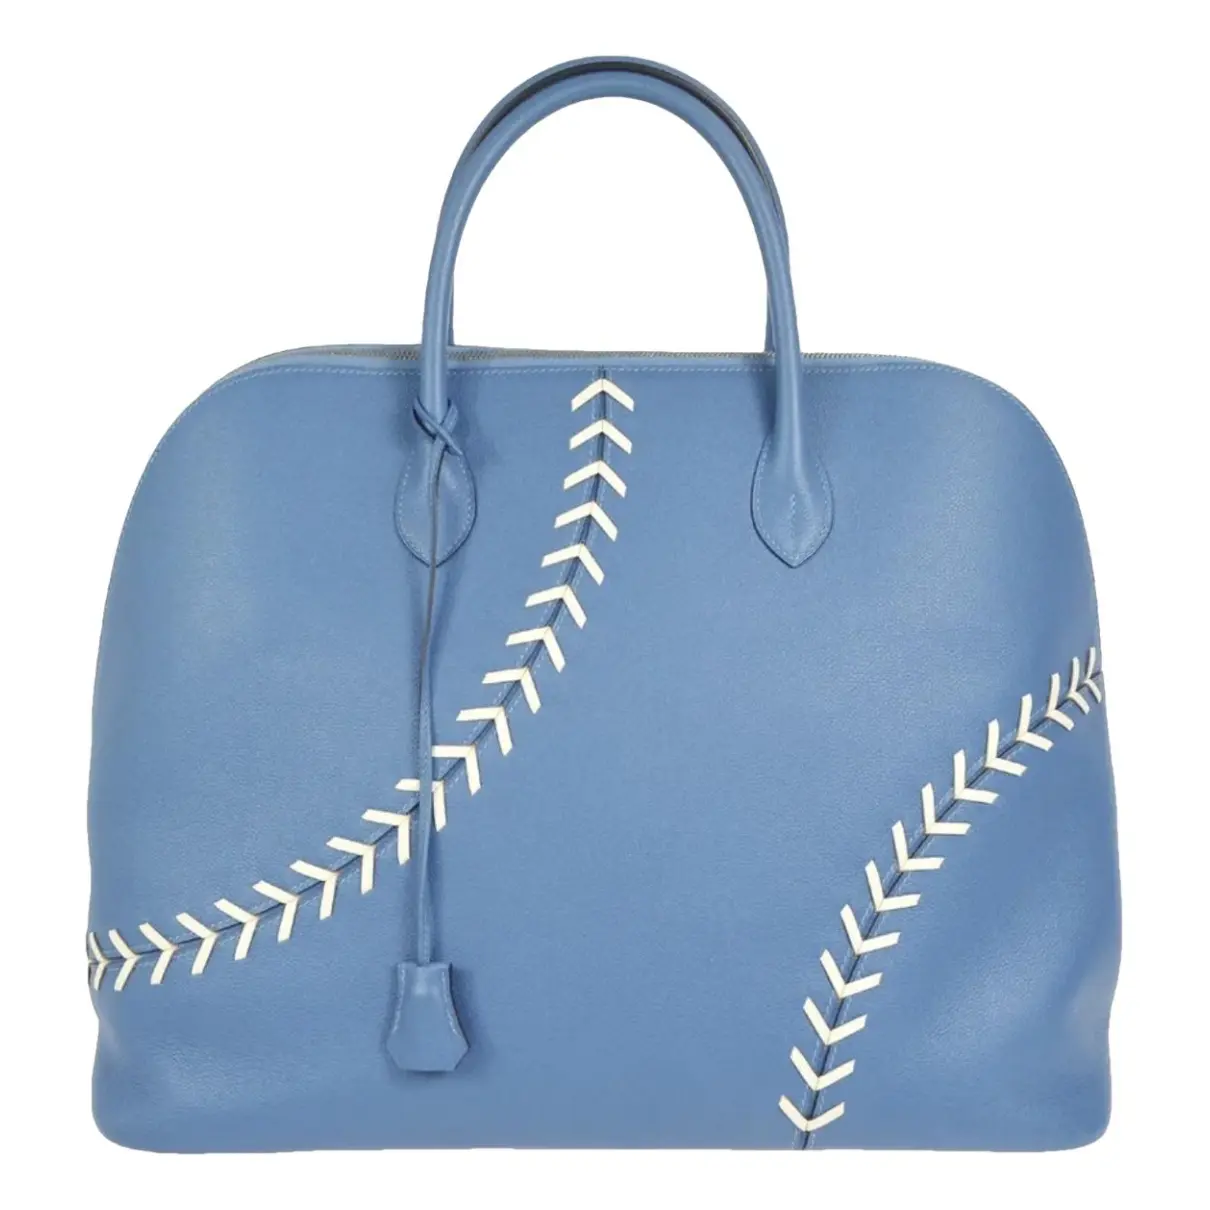 Bolide leather handbag